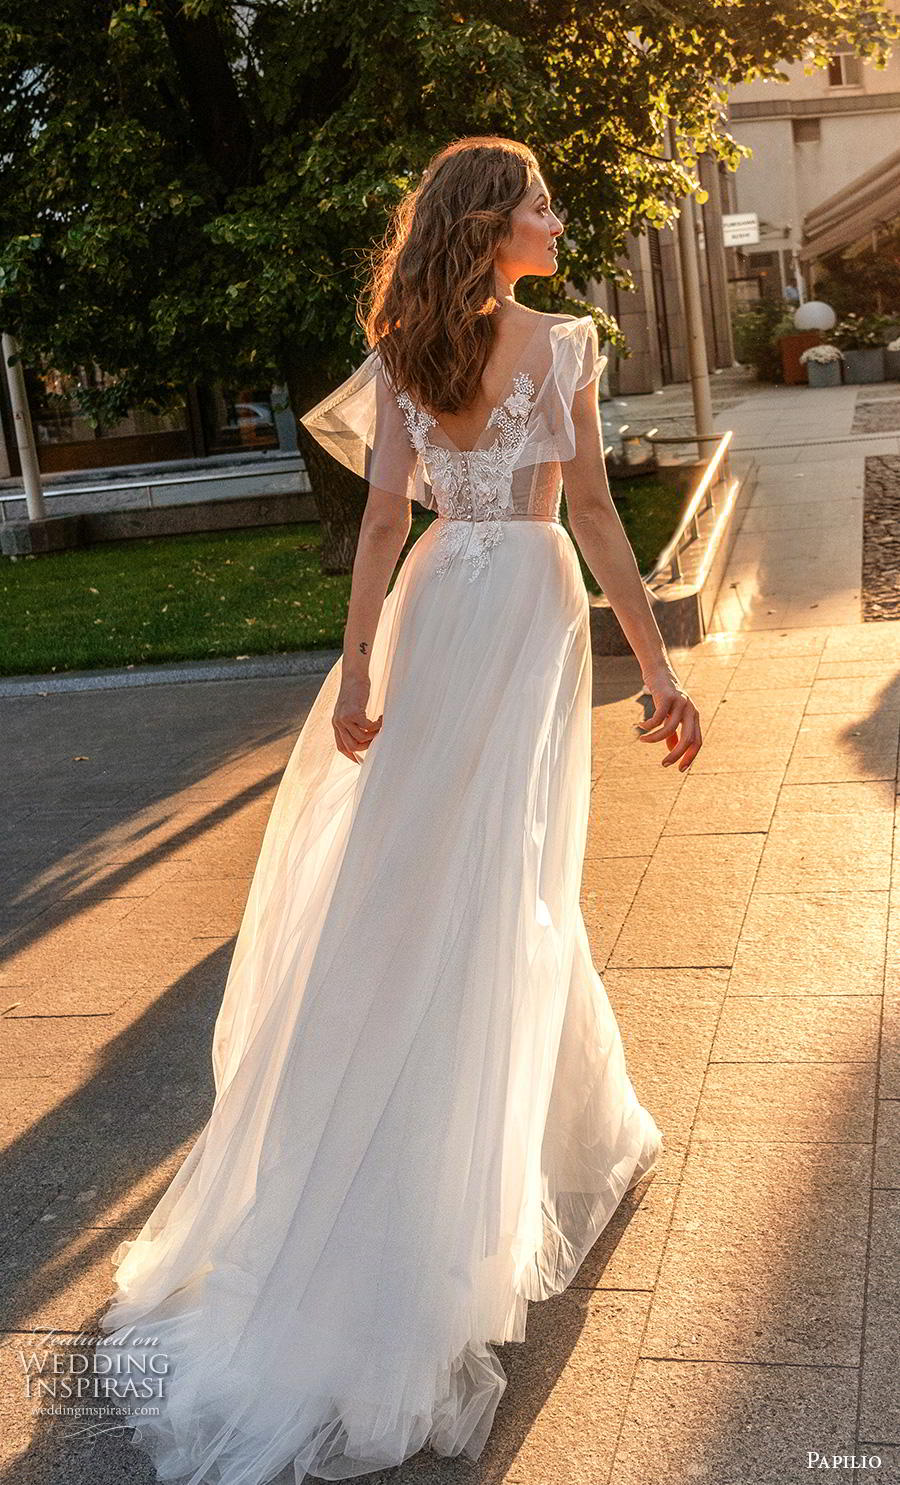 Papilio Light 2019 Wedding Dresses — “Cosmopolitan City” Bridal ...